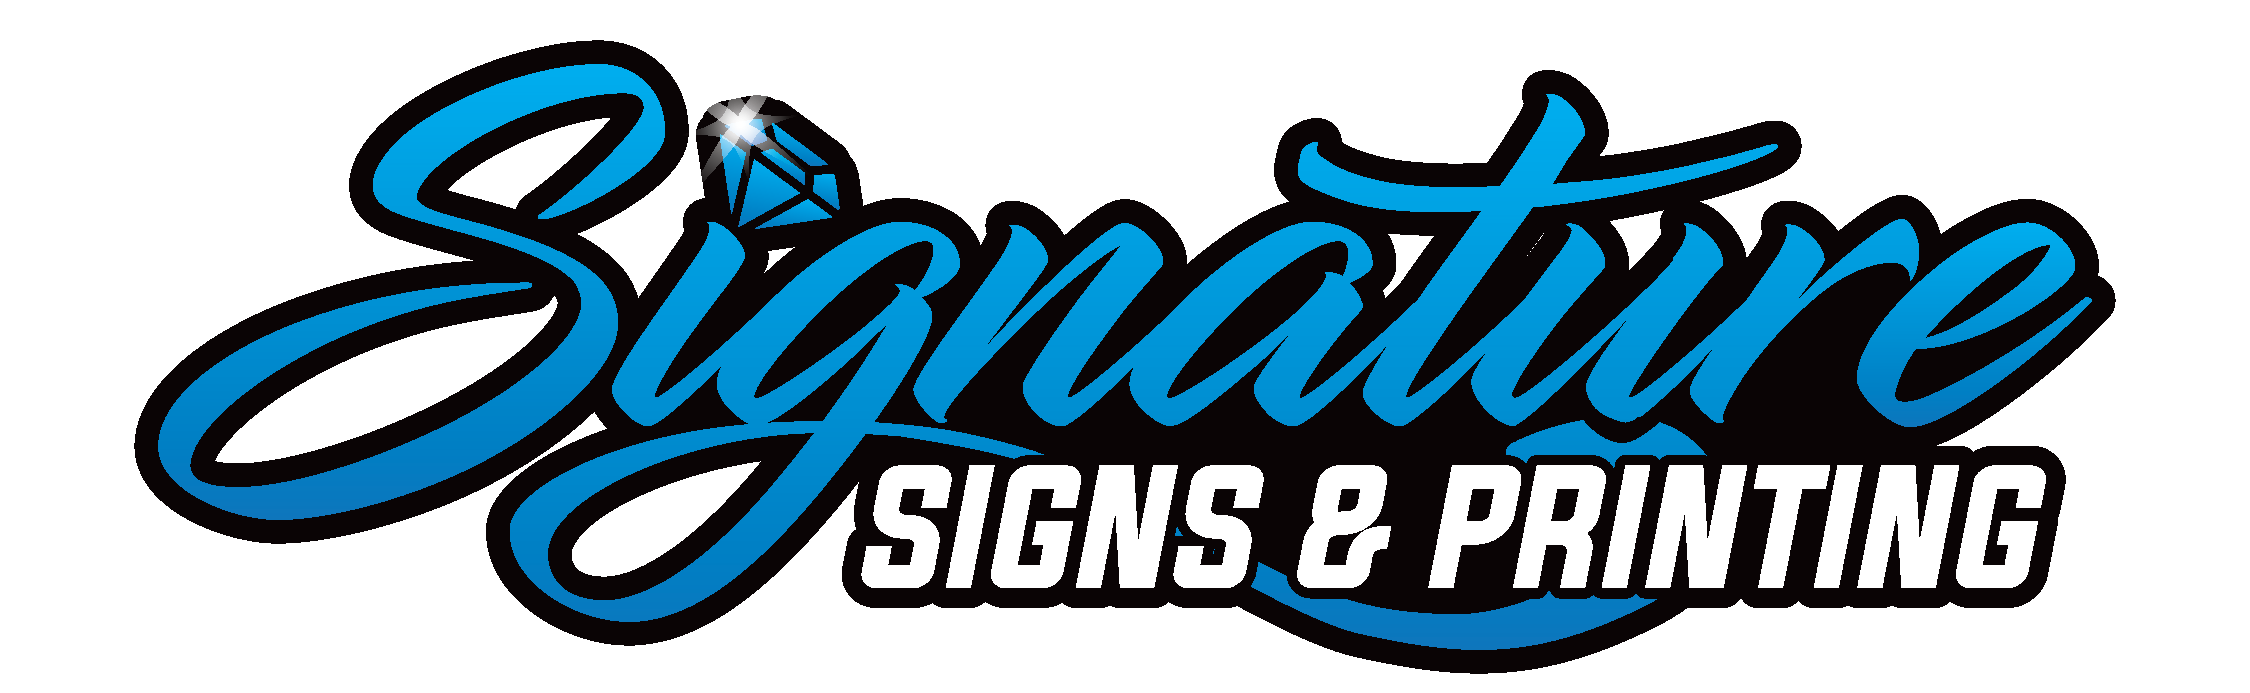 Signature Signs & Printing logo